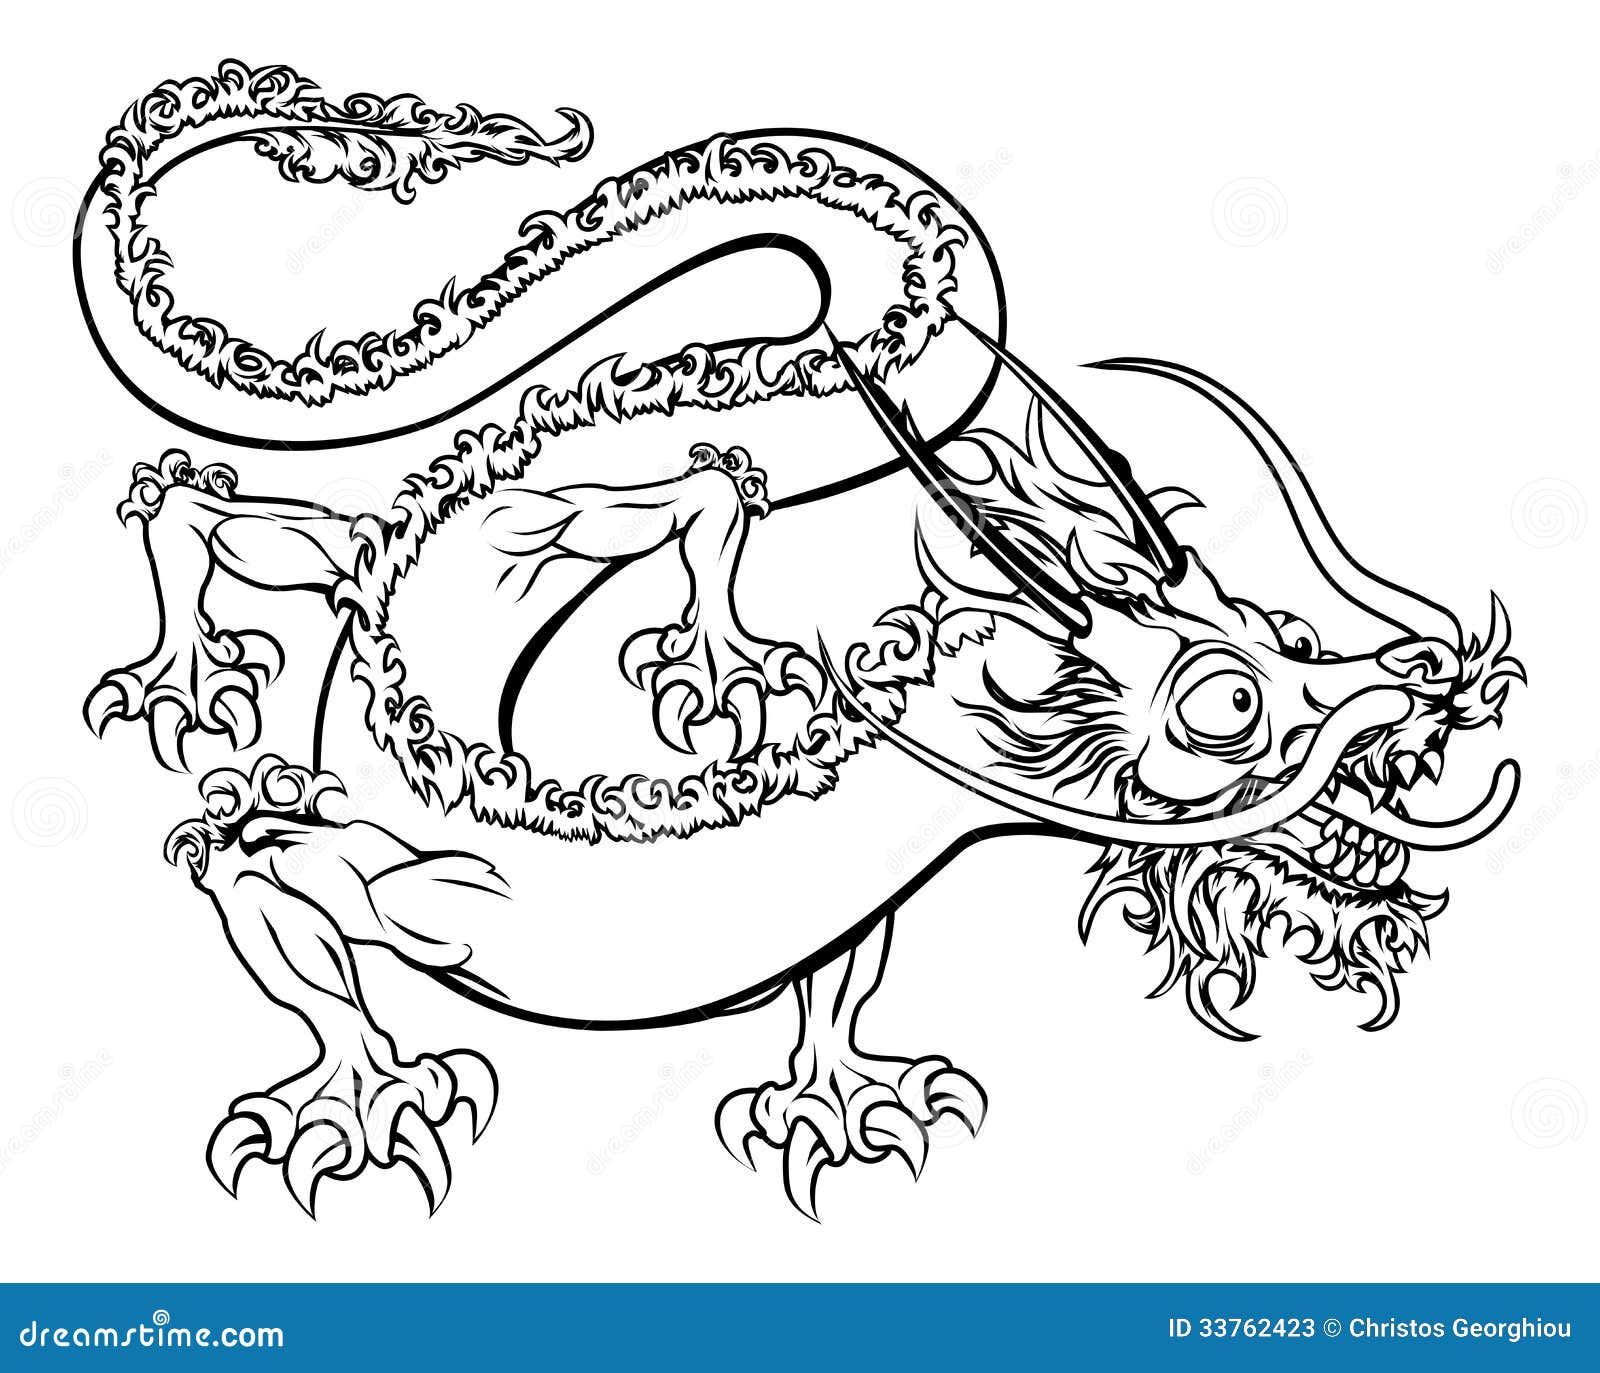 Stylised Dragon Illustration Stock Vector - Image: 33762423